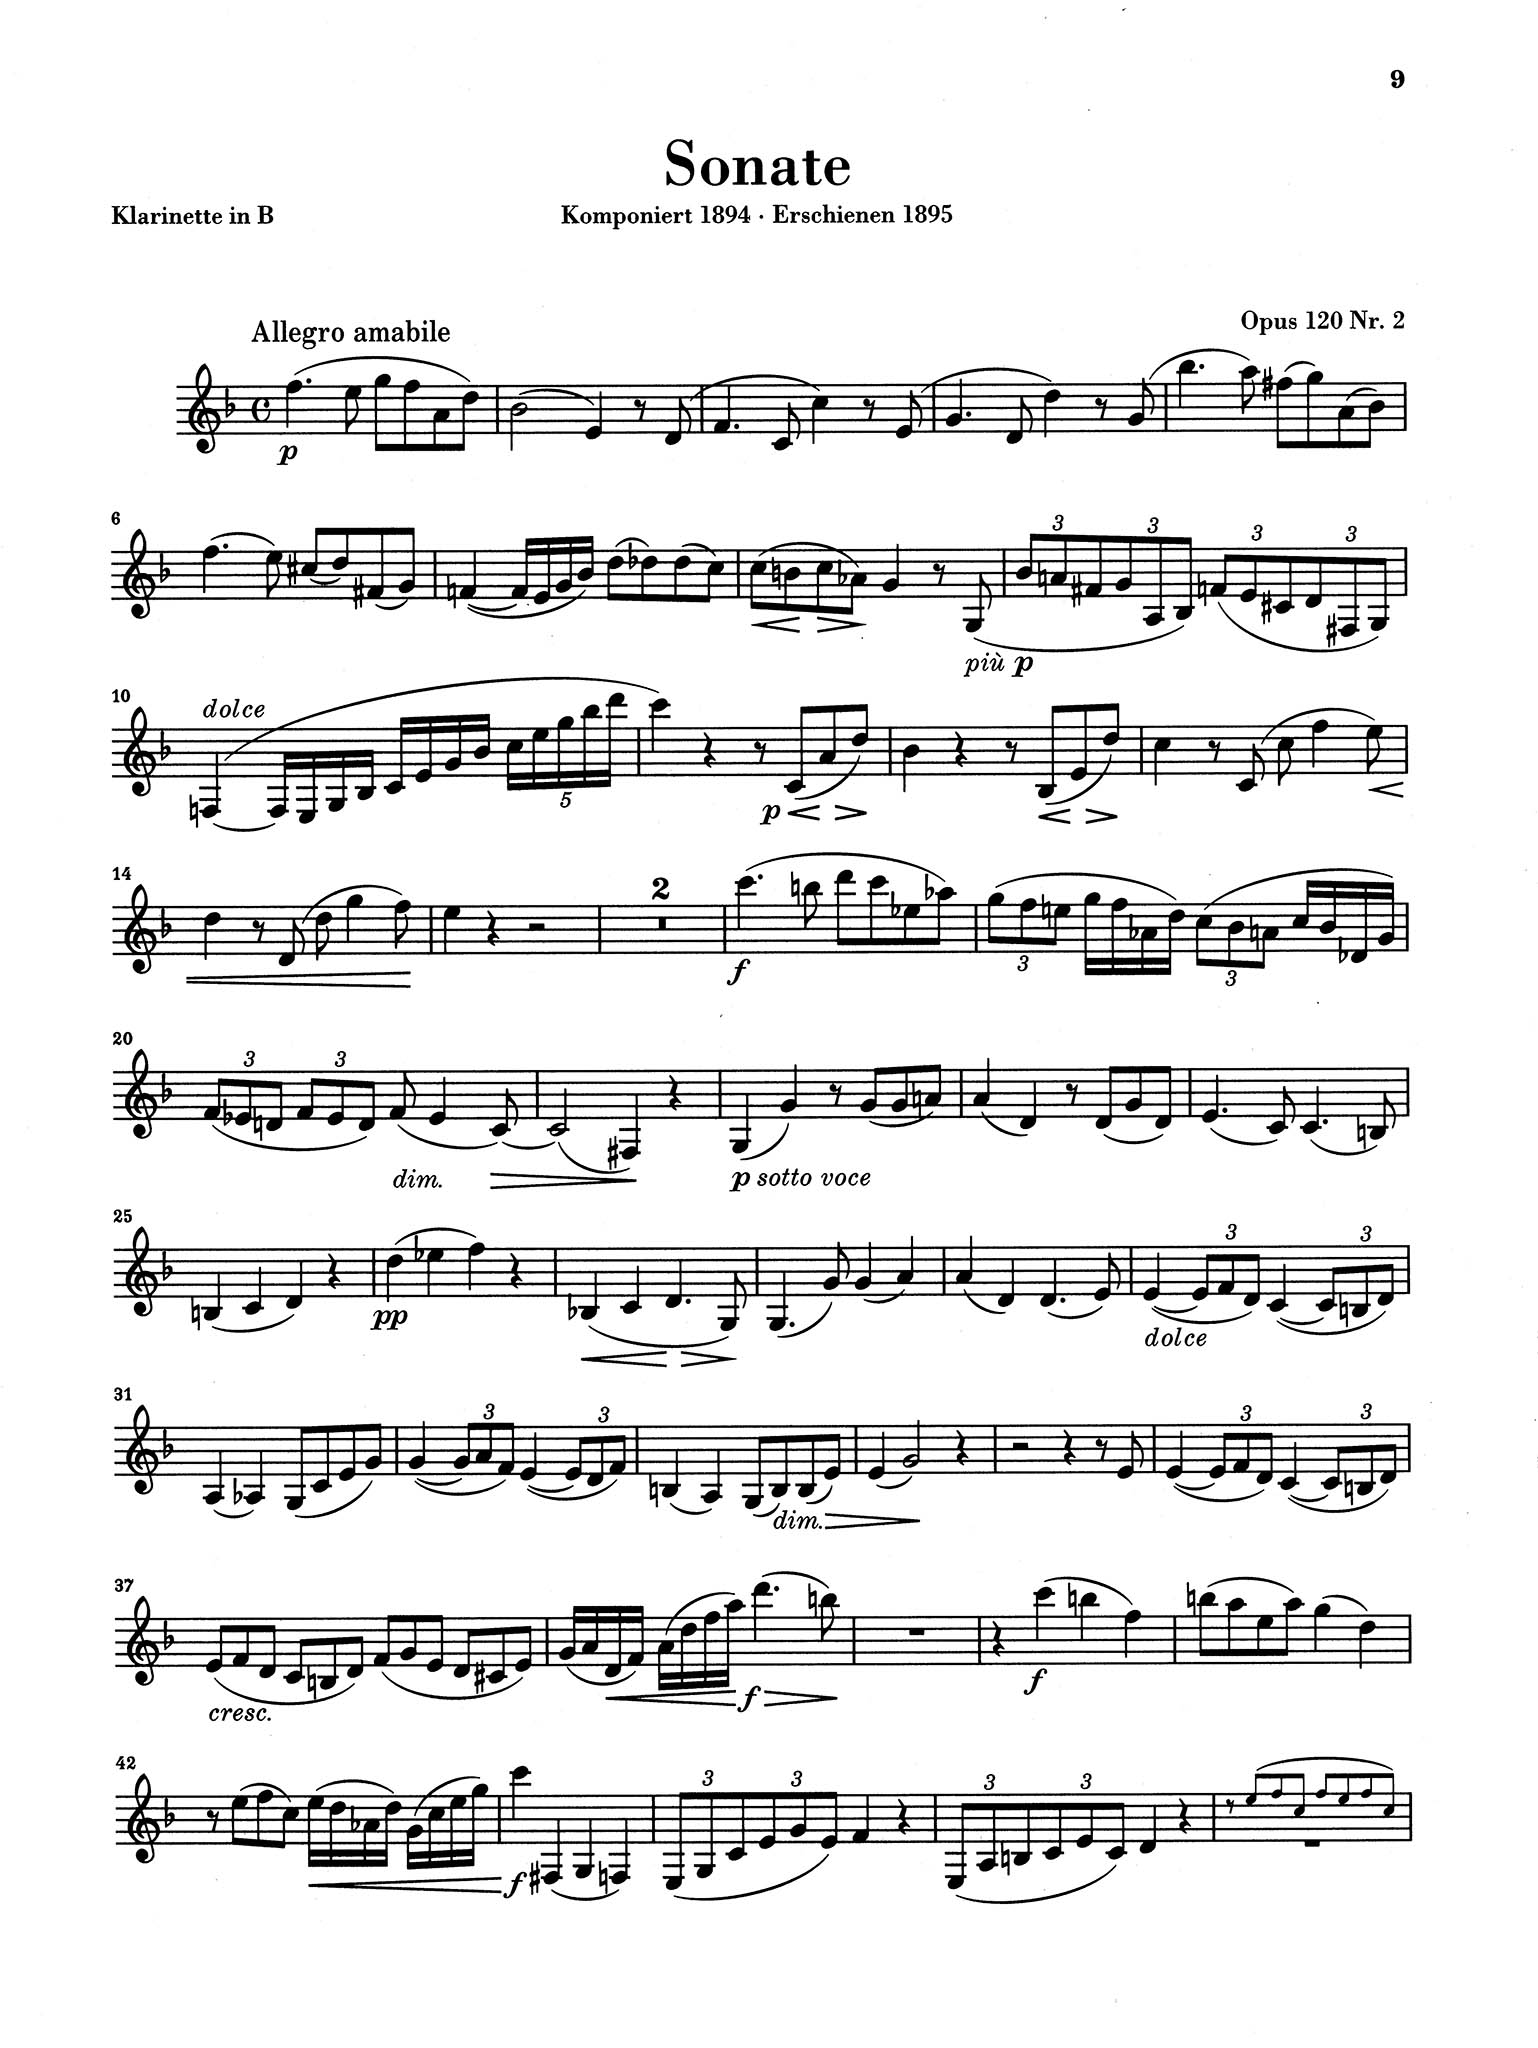 Sonata in E-flat Major, Op. 120 No. 2 Clarinet part